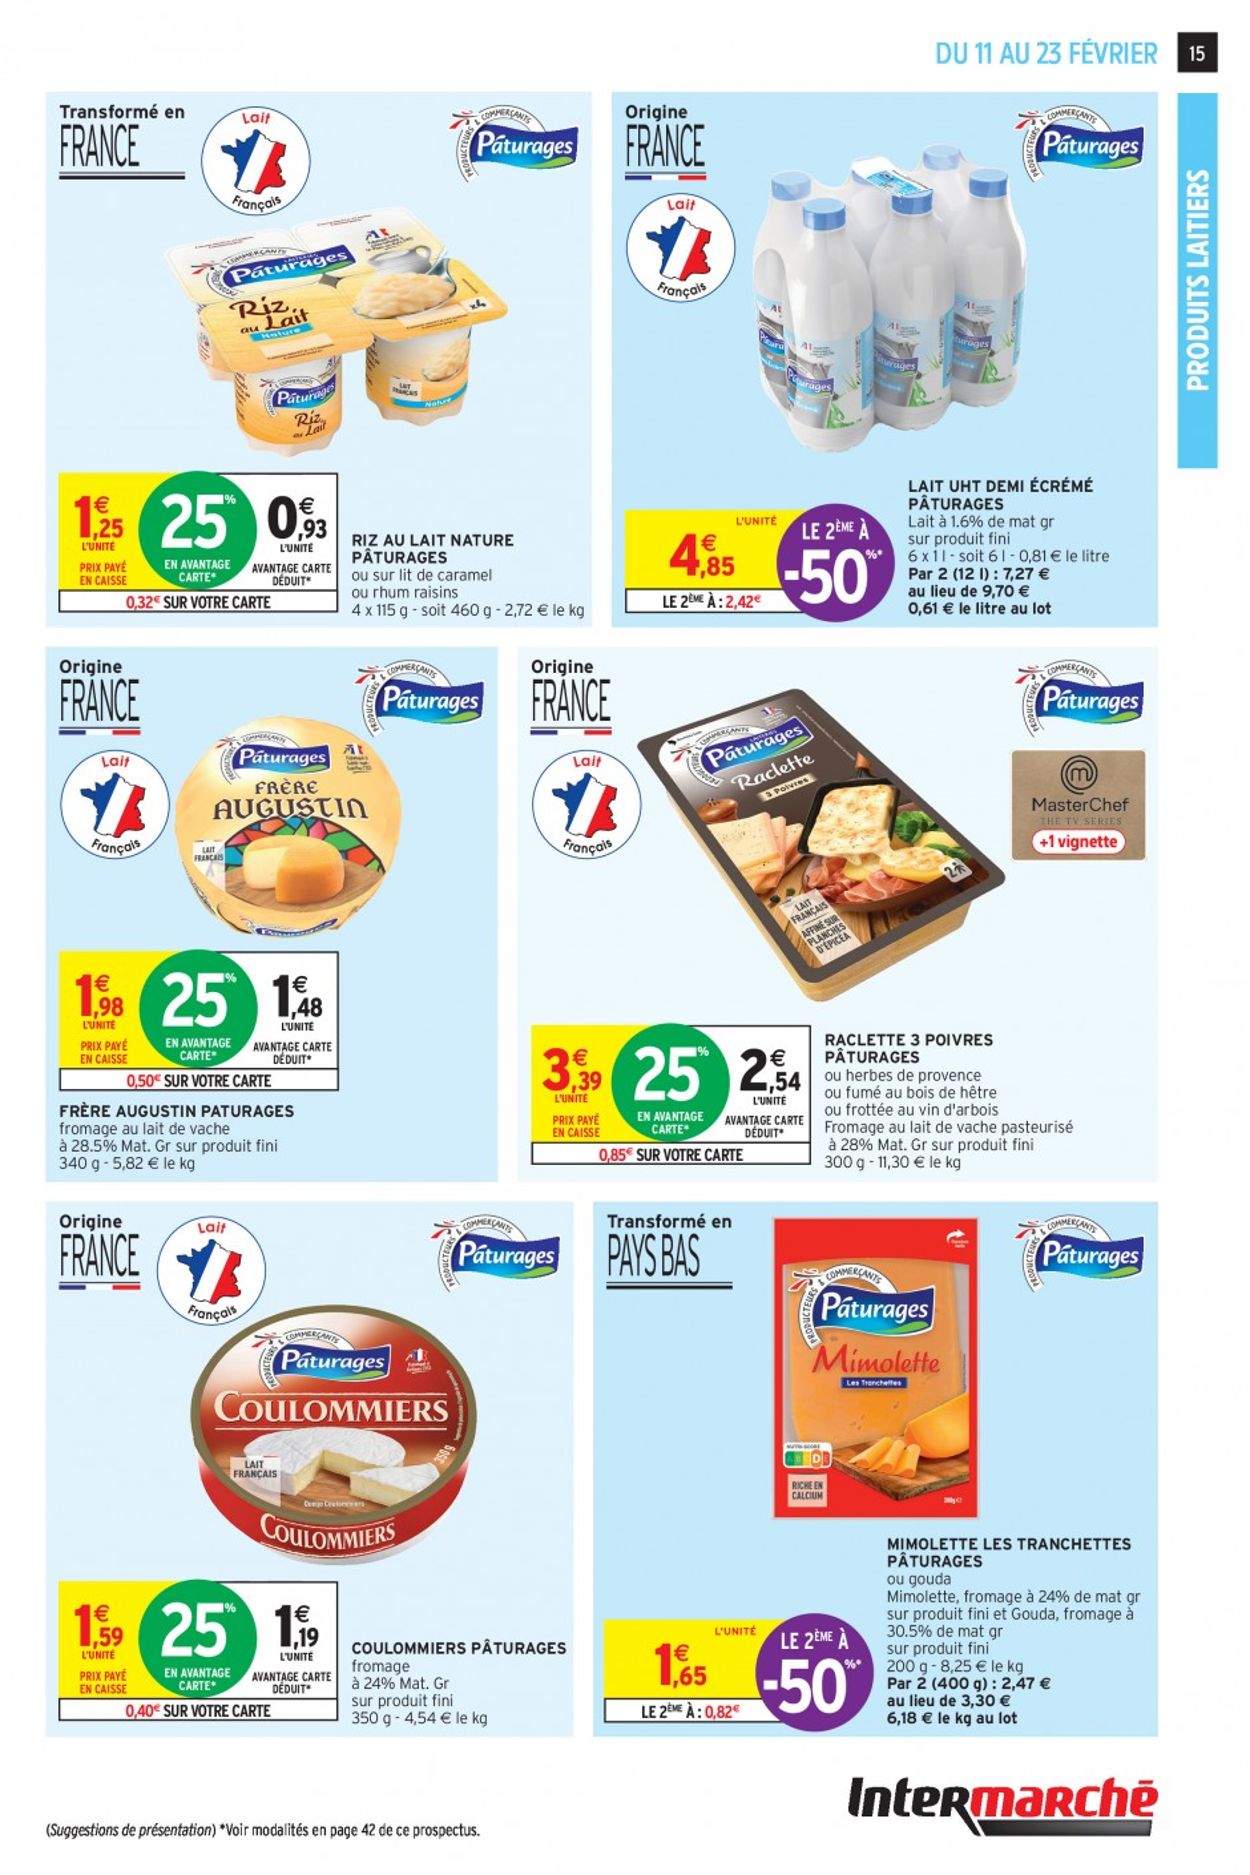 Intermarché Catalogue - 11.02-23.02.2020 (Page 15)